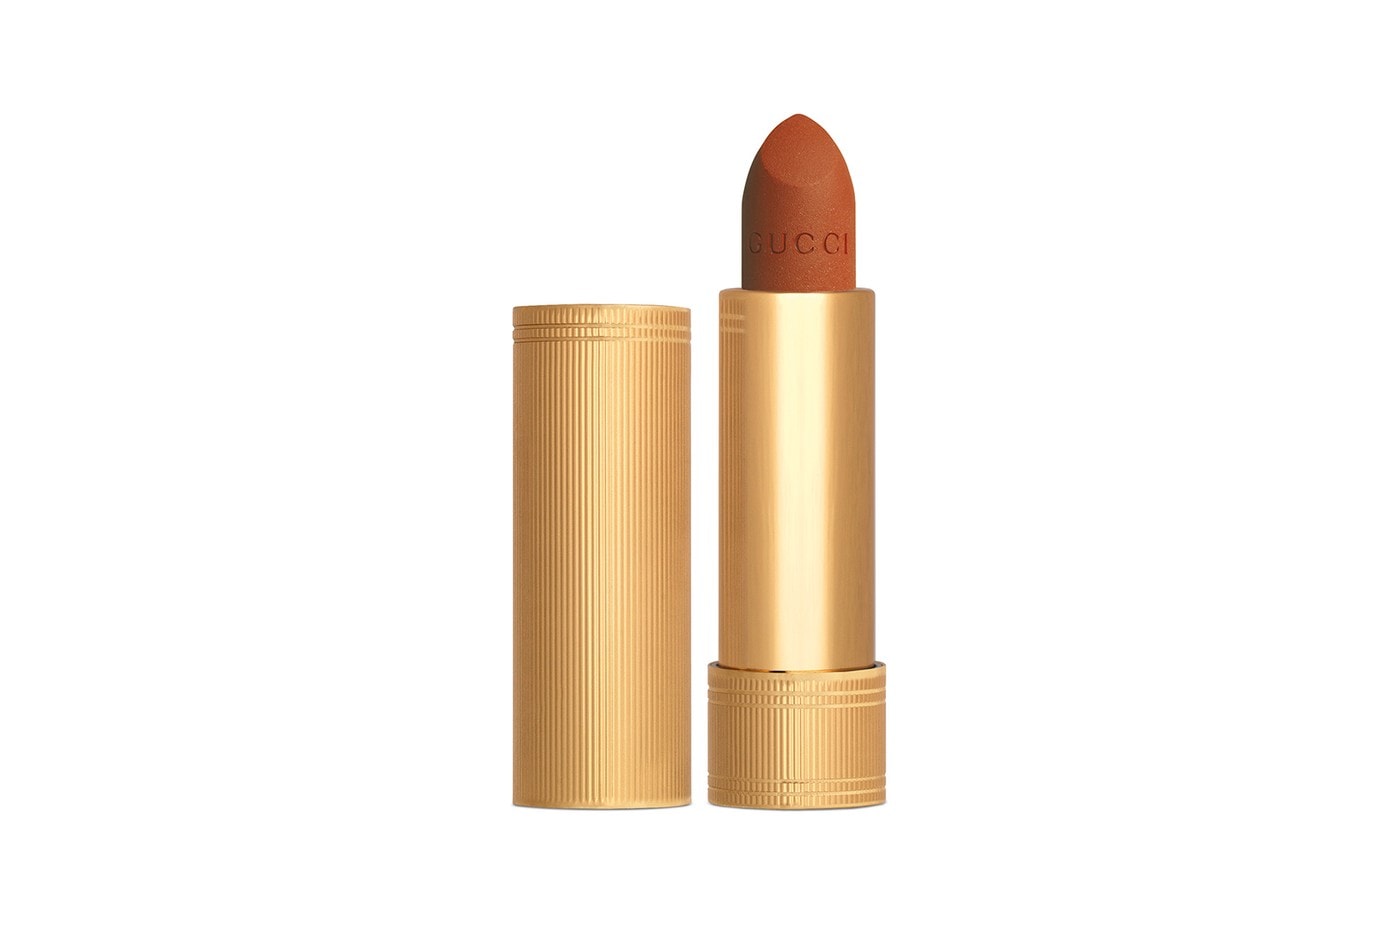 gucci beauty matte lipstick collection rouge a levres mat shades purple orange brown release